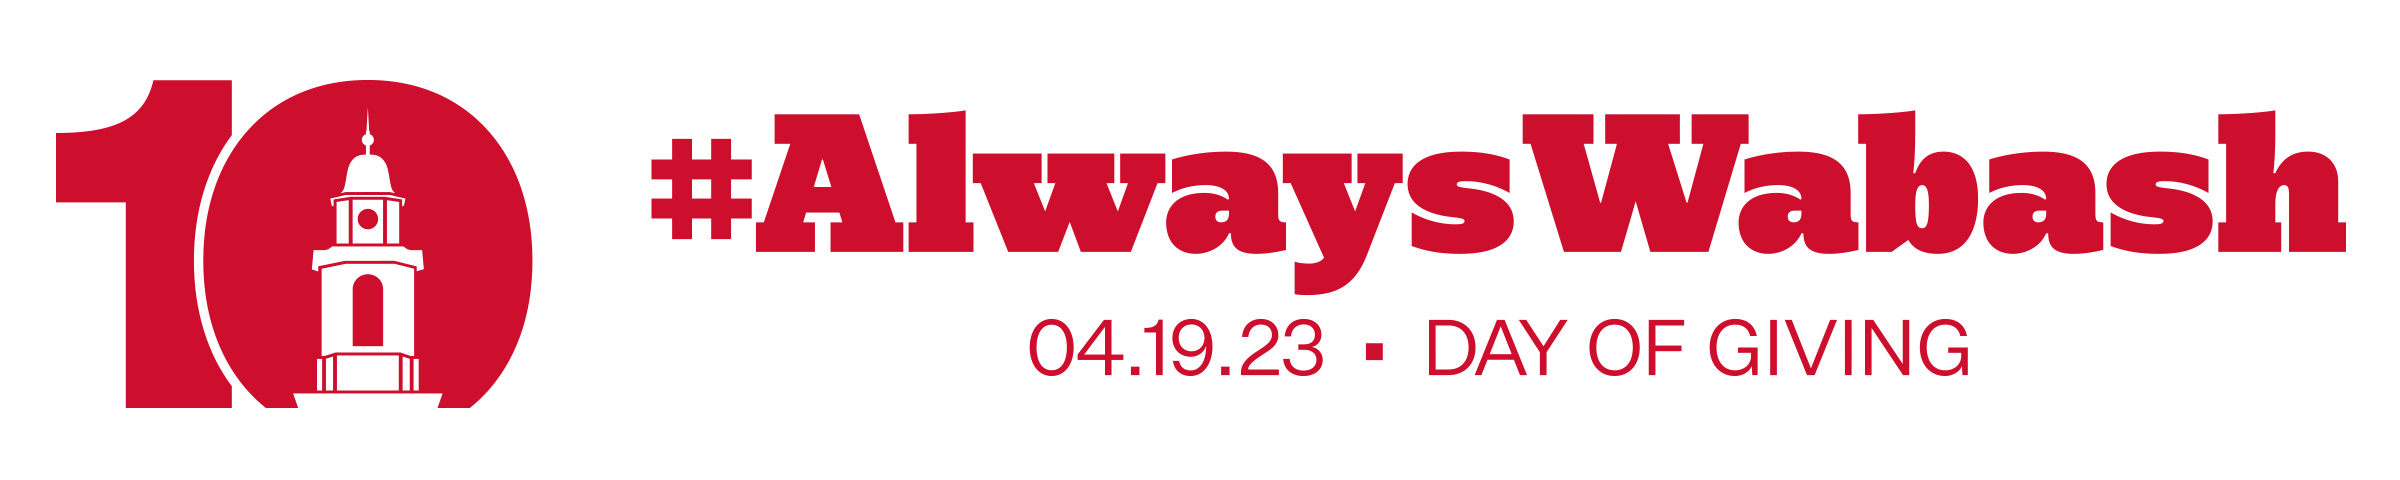 Wabash 10th Day of Giving - 04.19.23 - ##AlwaysWabash